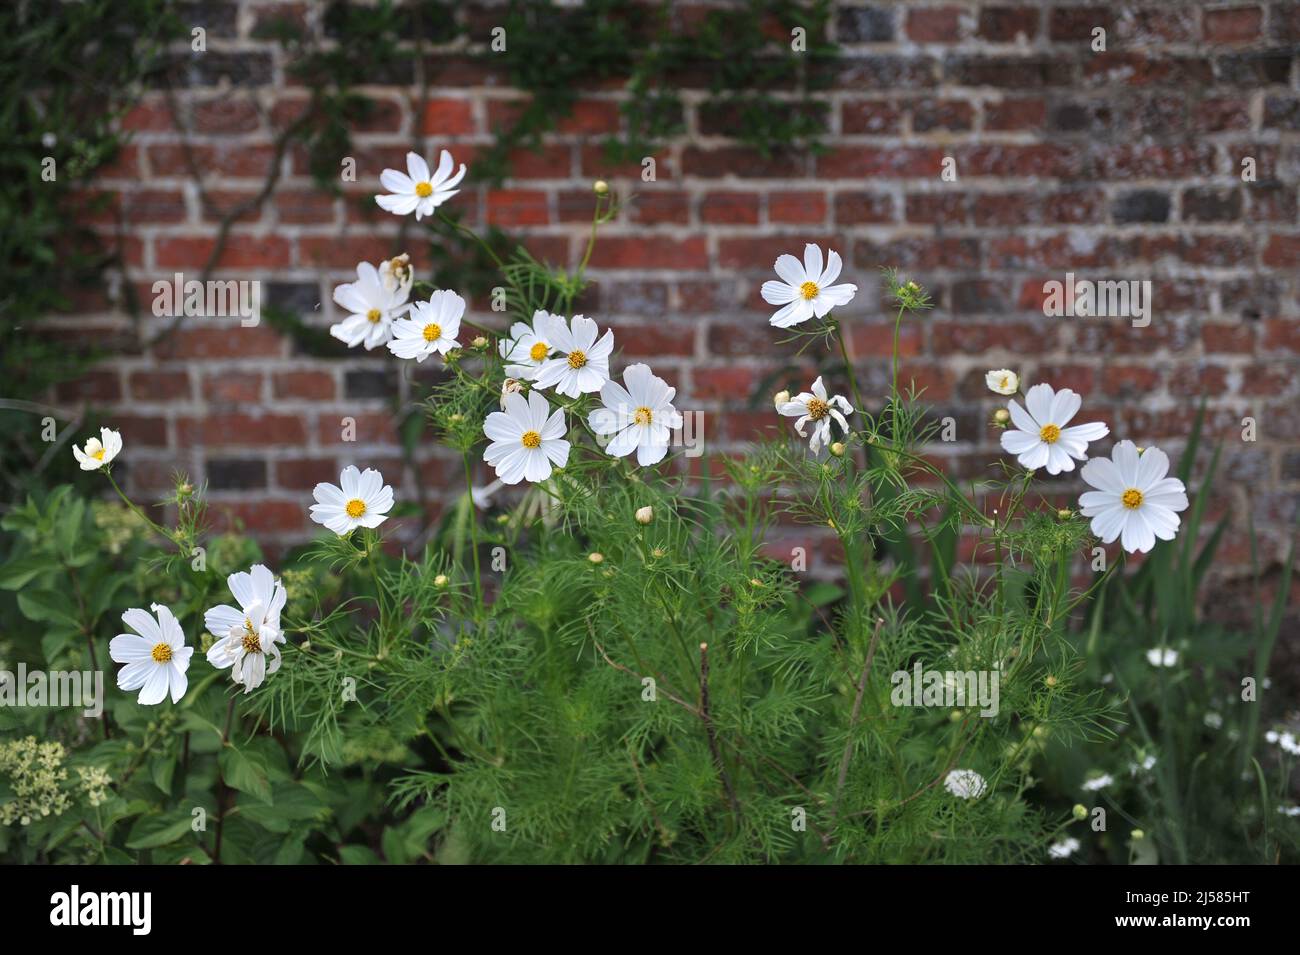 White cosmea (Cosmos bipinnatus) blooms in a garden in July Stock Photo